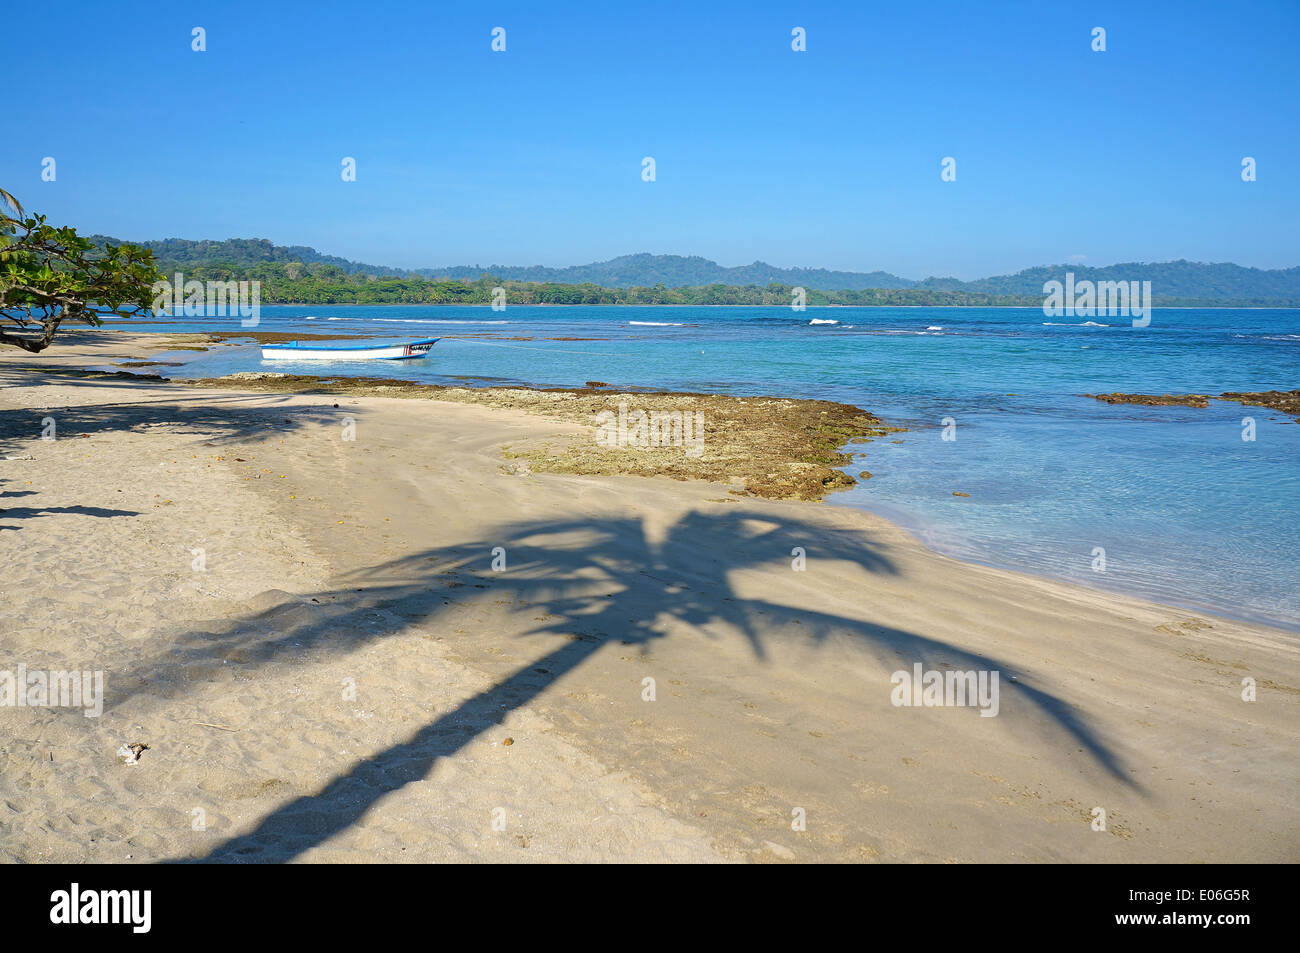 Shade of palm tree on a peaceful beach, Caribbean sea, Puerto Viejo de Talamanca, Costa Rica Stock Photo